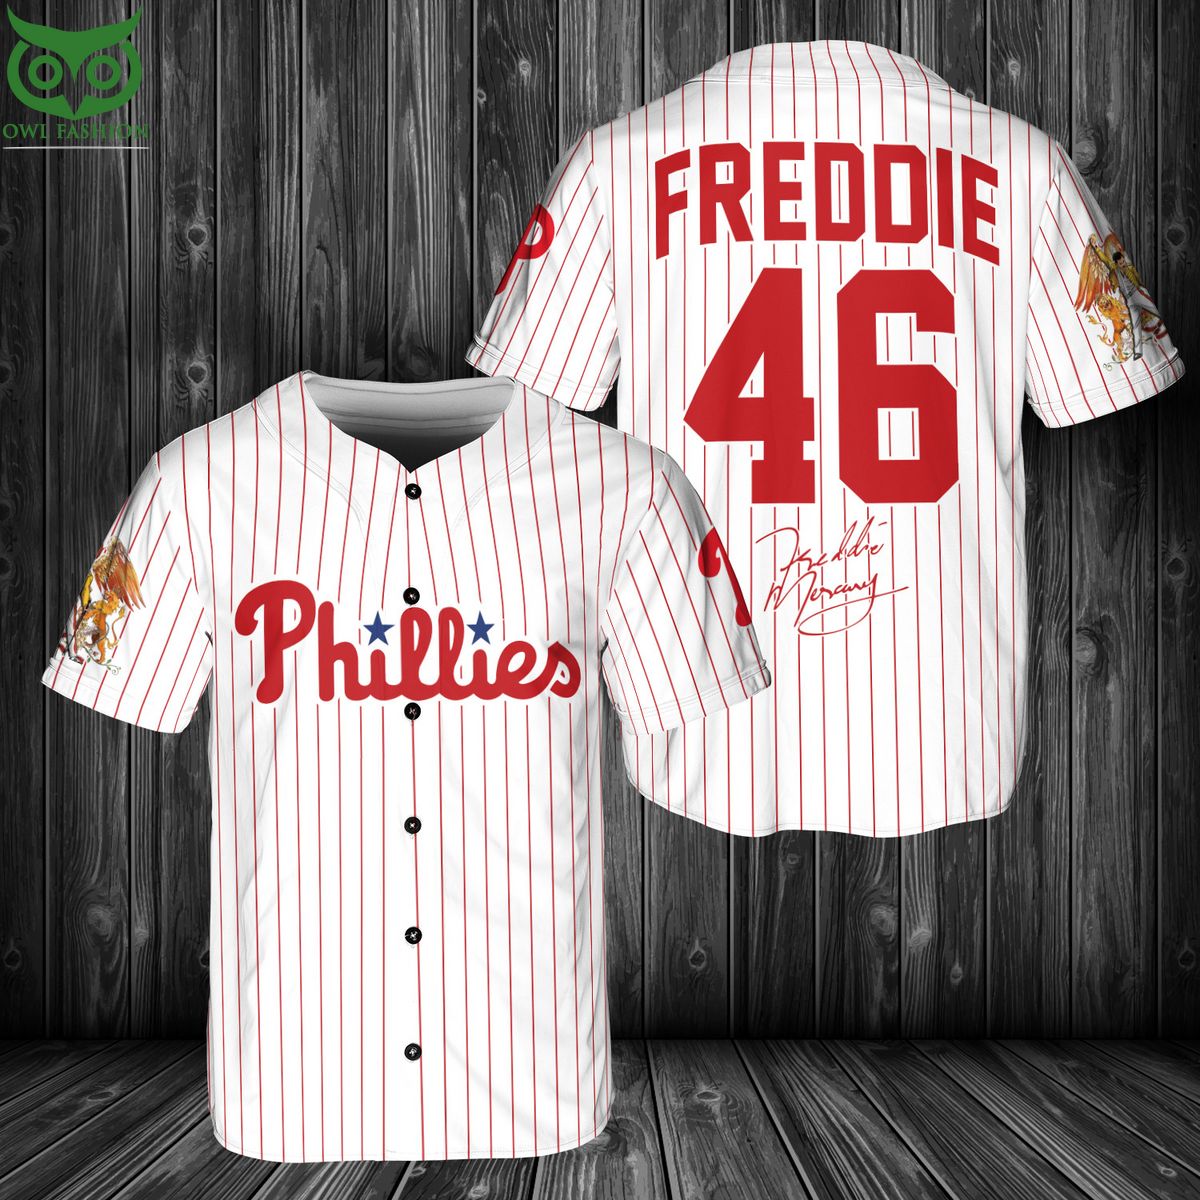 freddie mercury x philadelphia phillies baseball jersey shirt 1 AHoMw.jpg